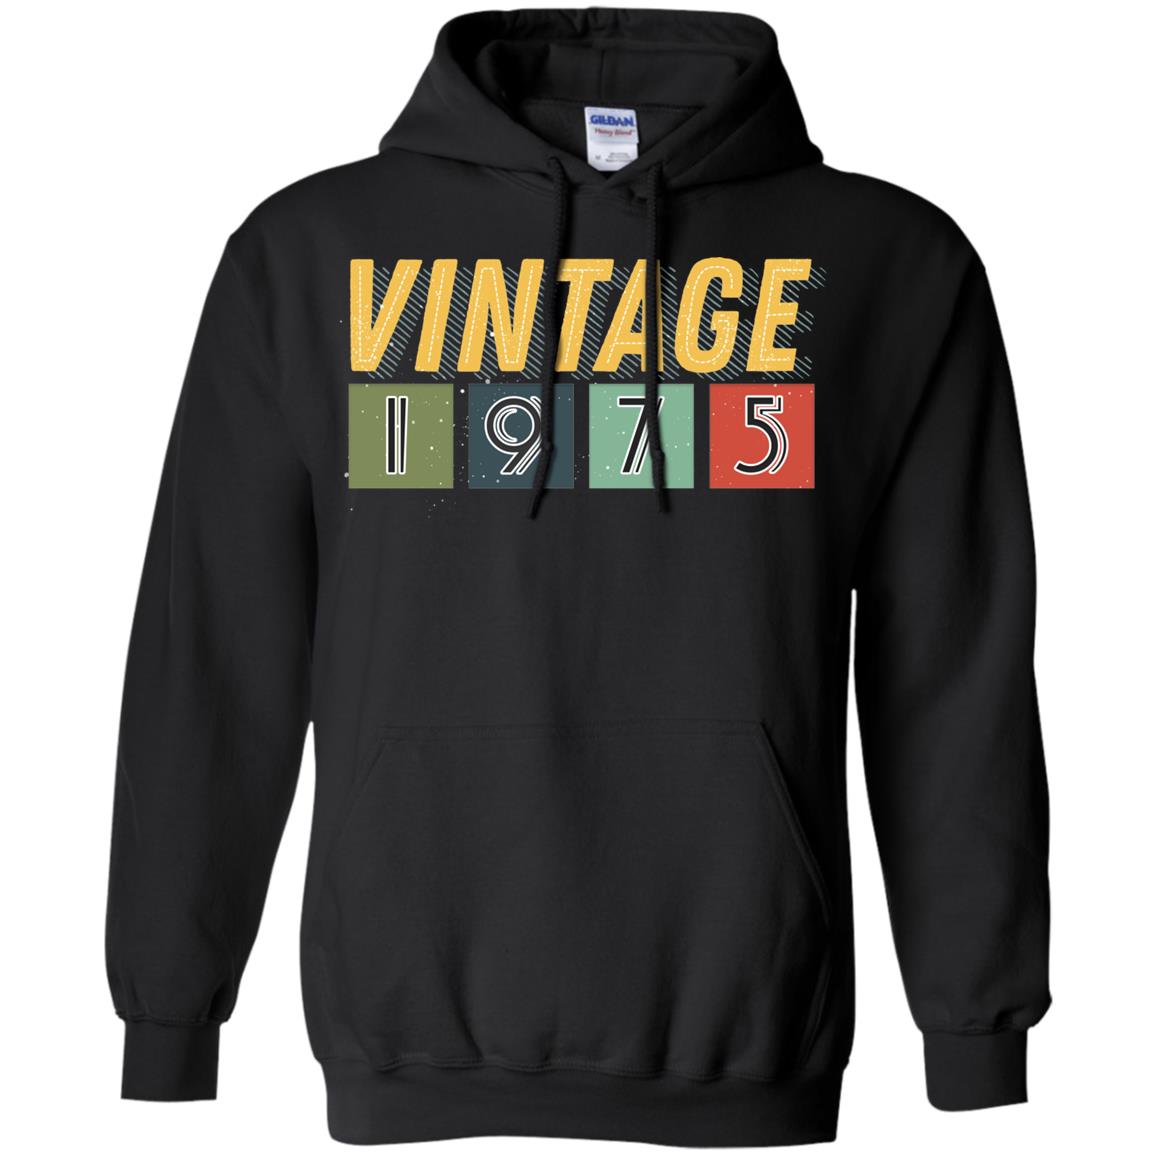 Vintage 1975 43th Birthday Gift Shirt For Mens Or WomensG185 Gildan Pullover Hoodie 8 oz.